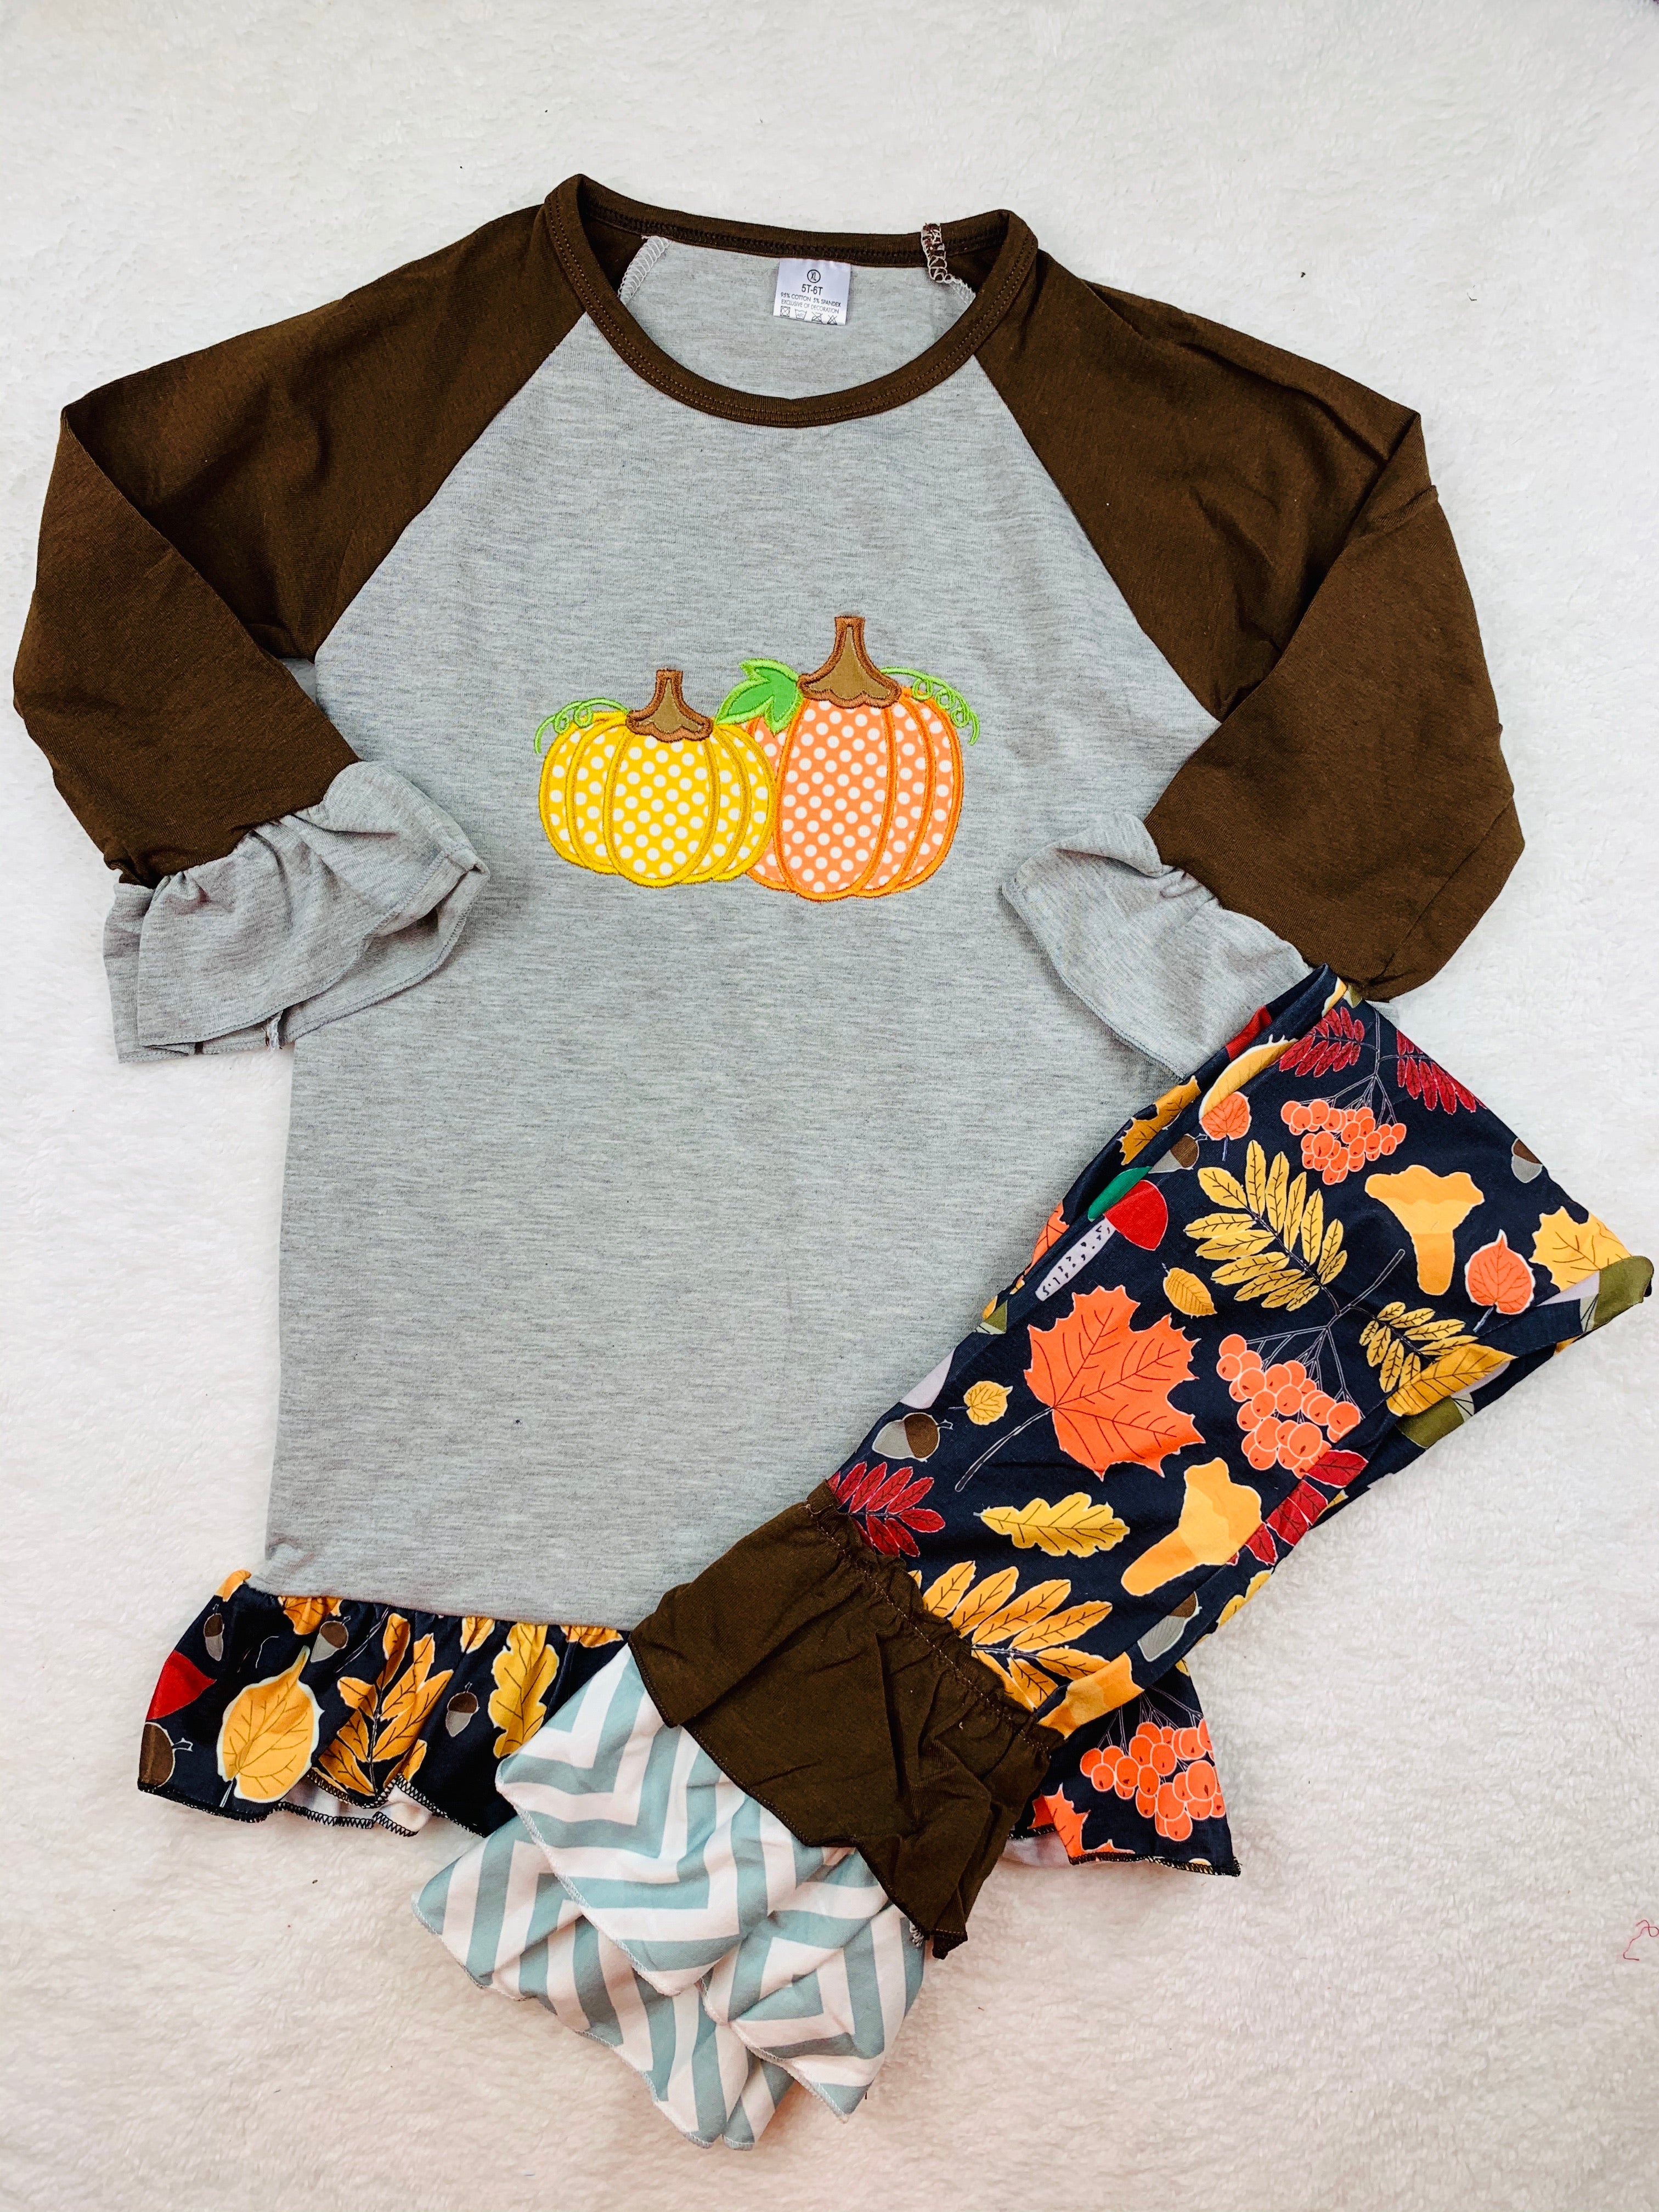 Autumn Pumpkins Collection (cotton) 5 styles available!